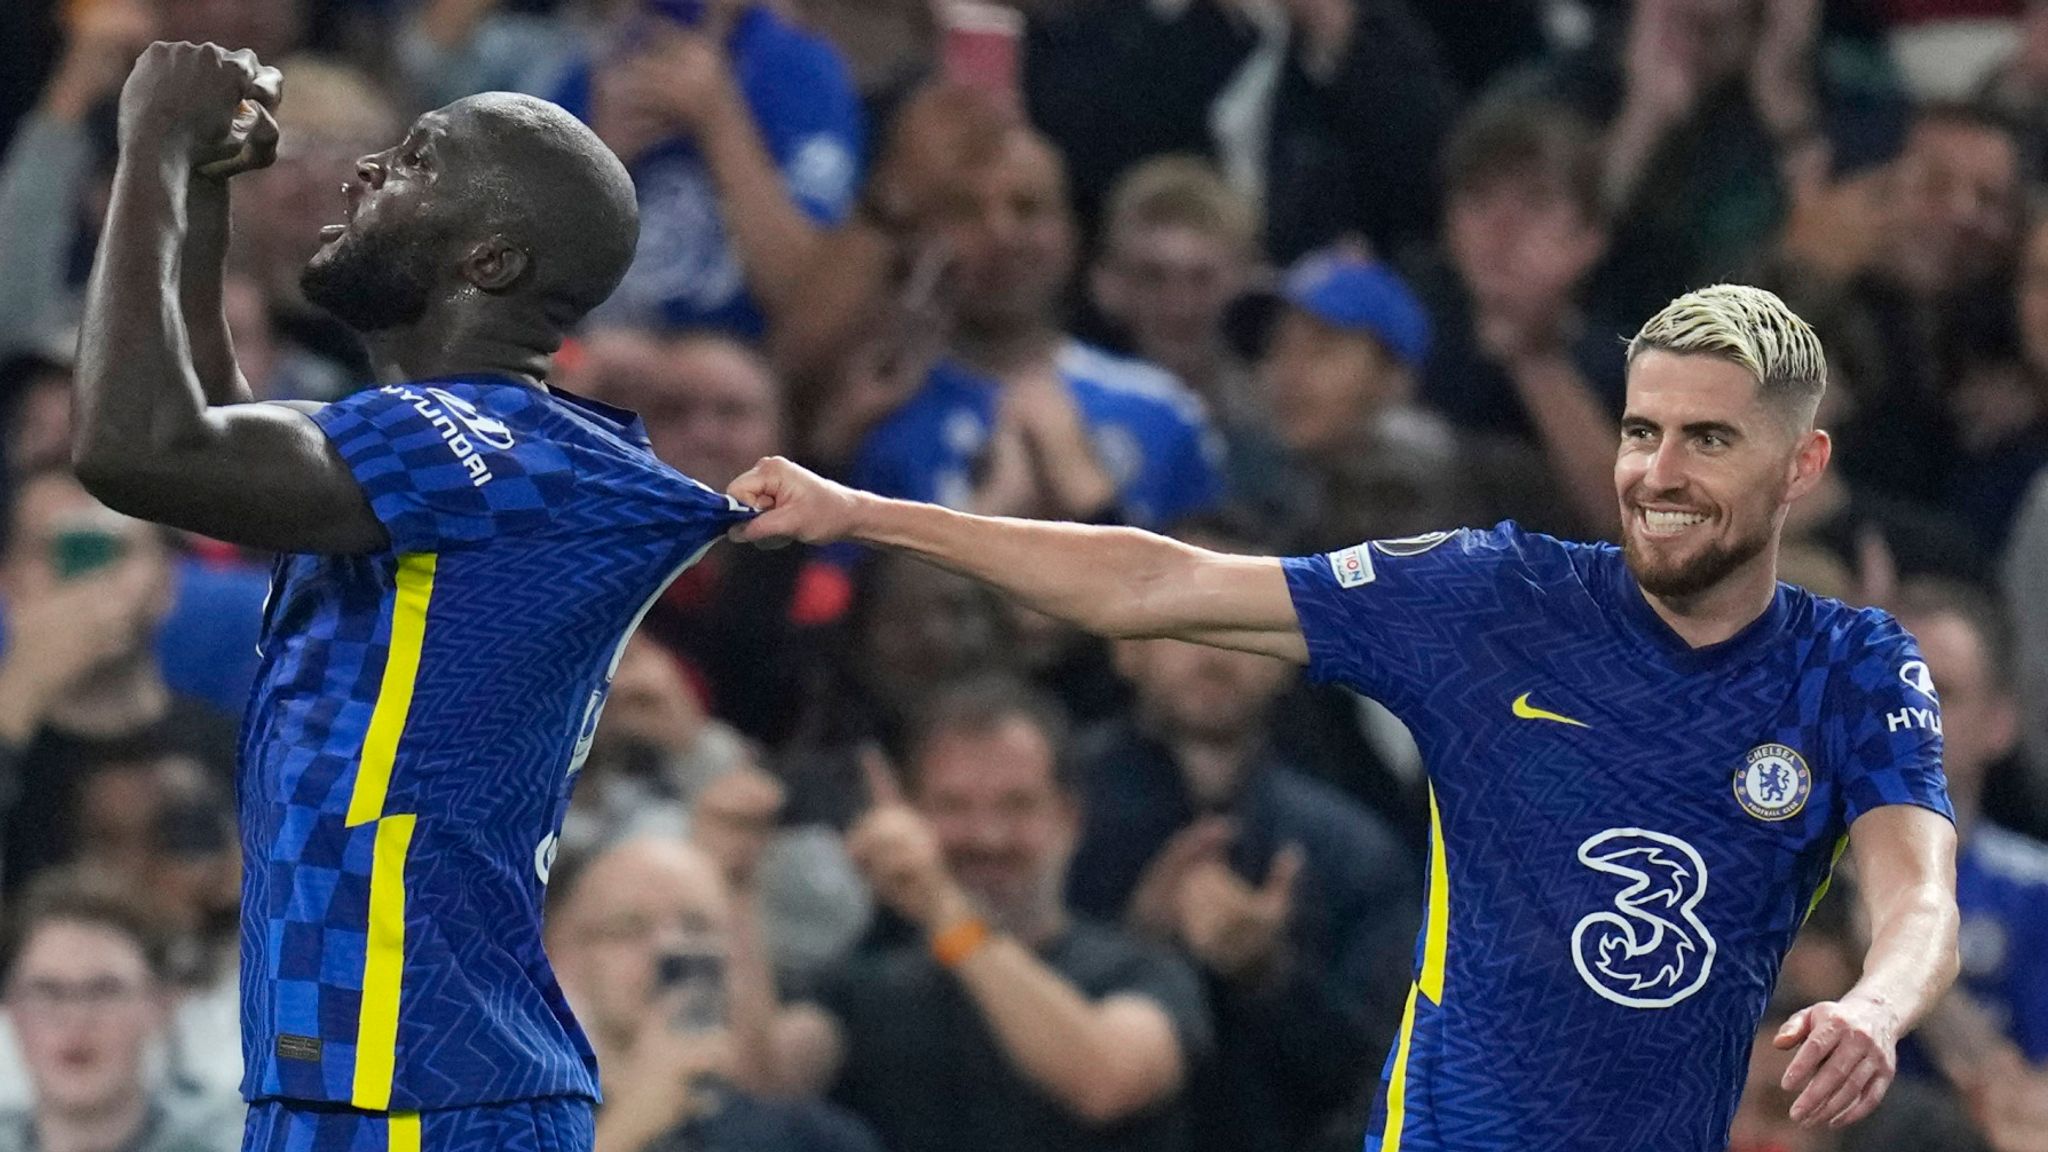 Chelsea 1-0 Zenit: Romelu Lukaku&#39;s second-half header hands under-par Chelsea victory on opening night | Football News | Sky Sports